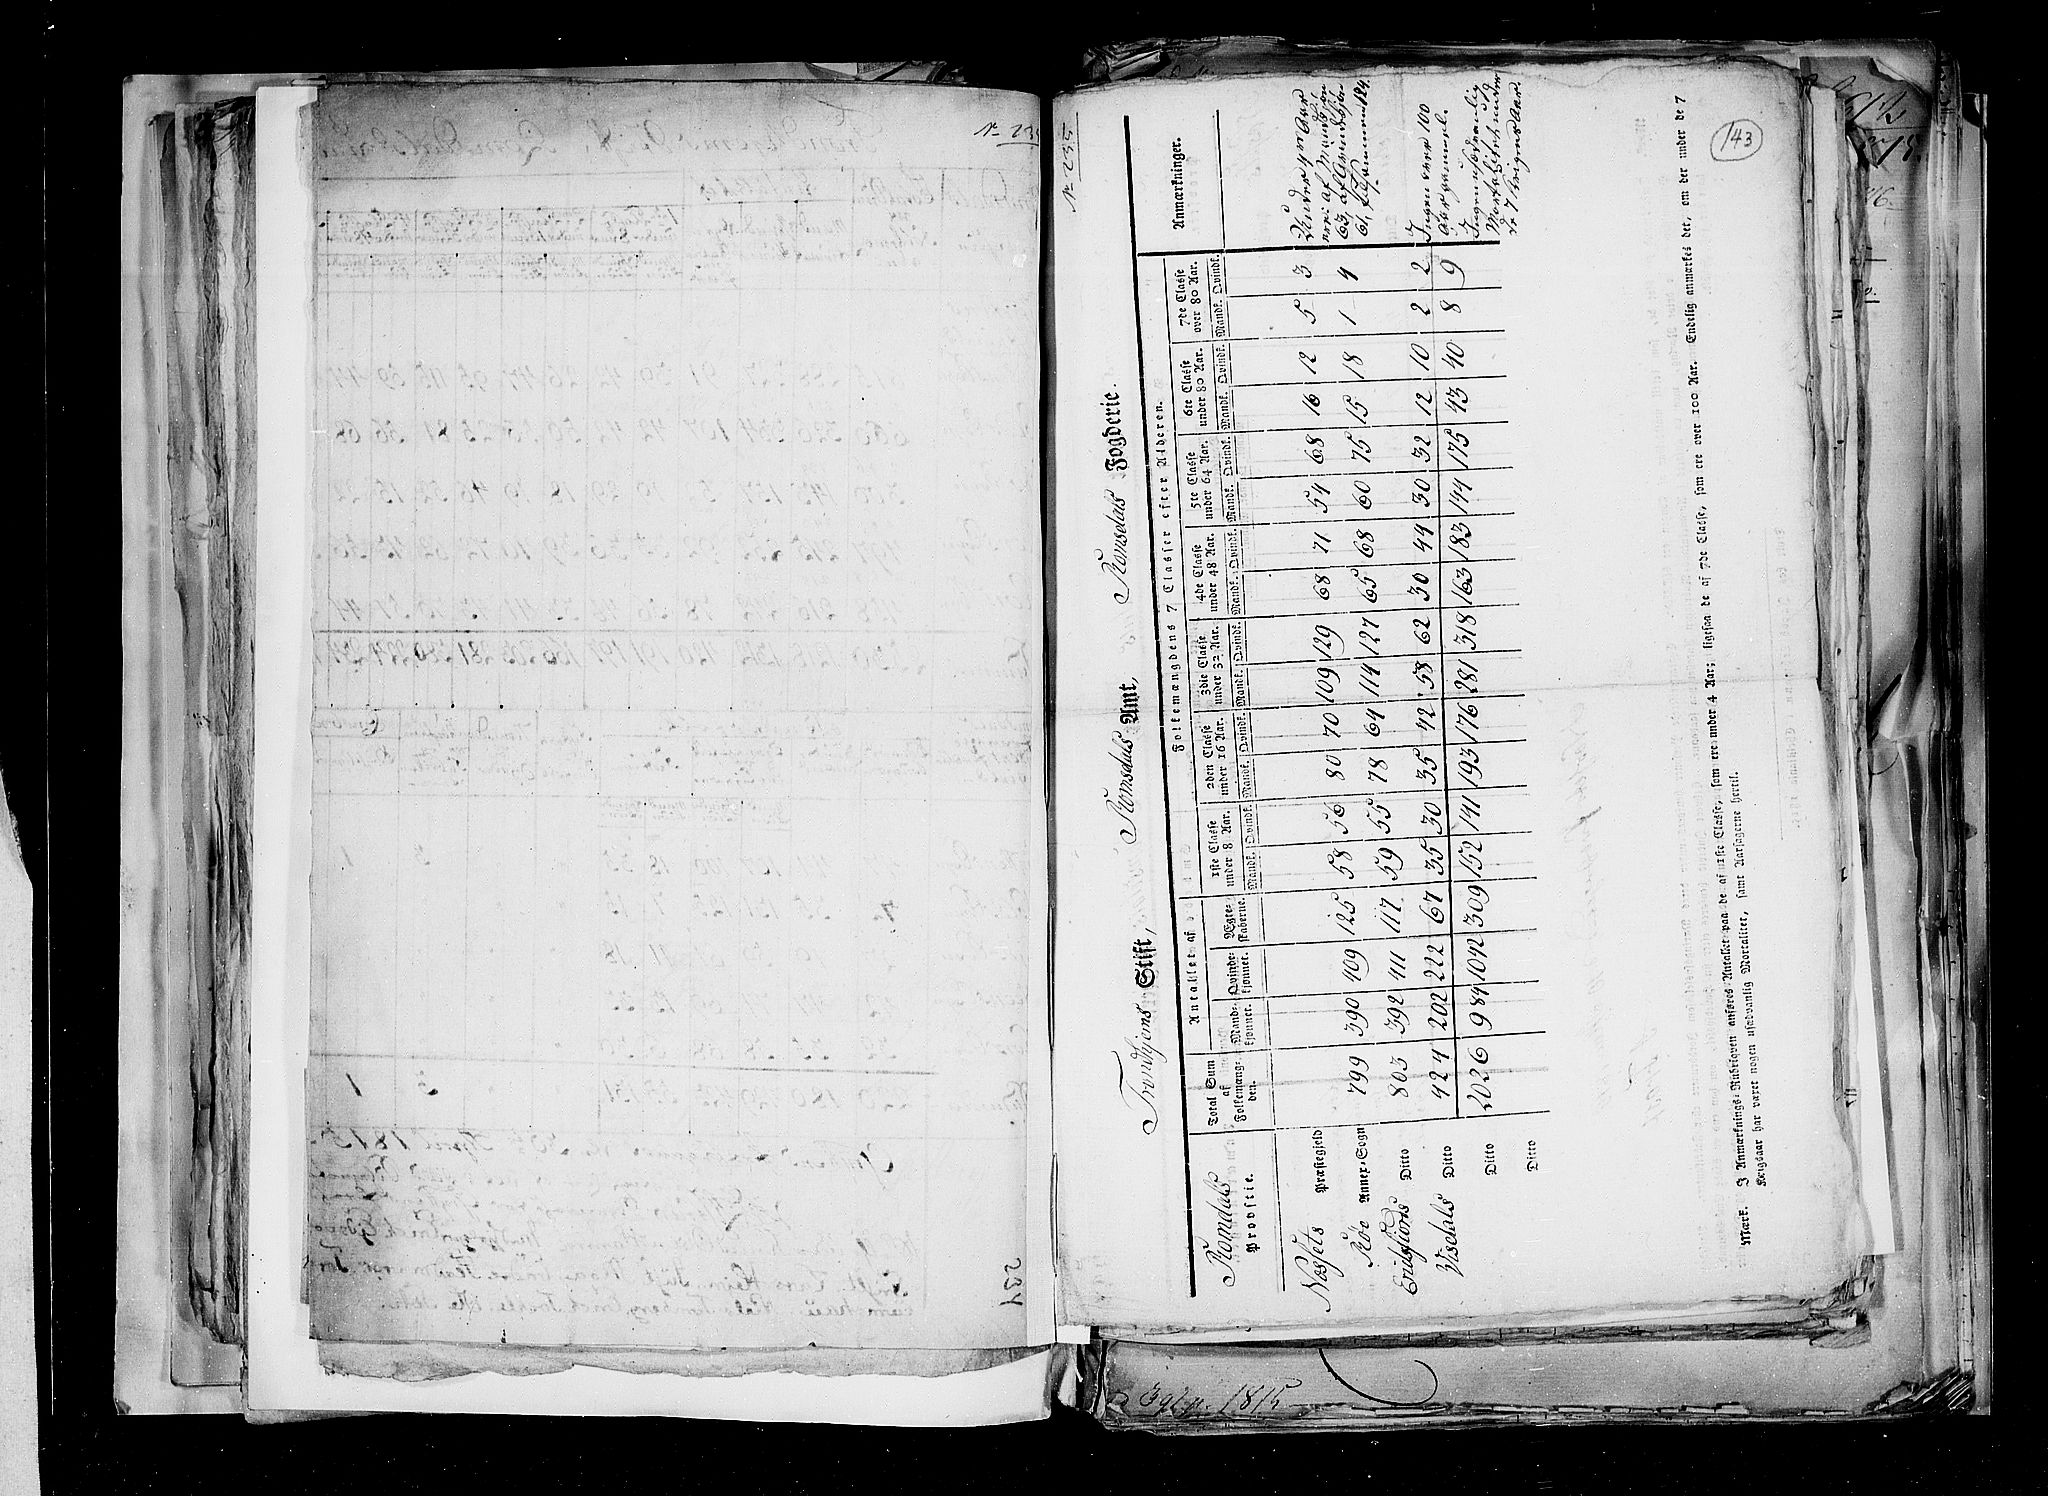 RA, Census 1815, vol. 2: Bergen stift and Trondheim stift, 1815, p. 89